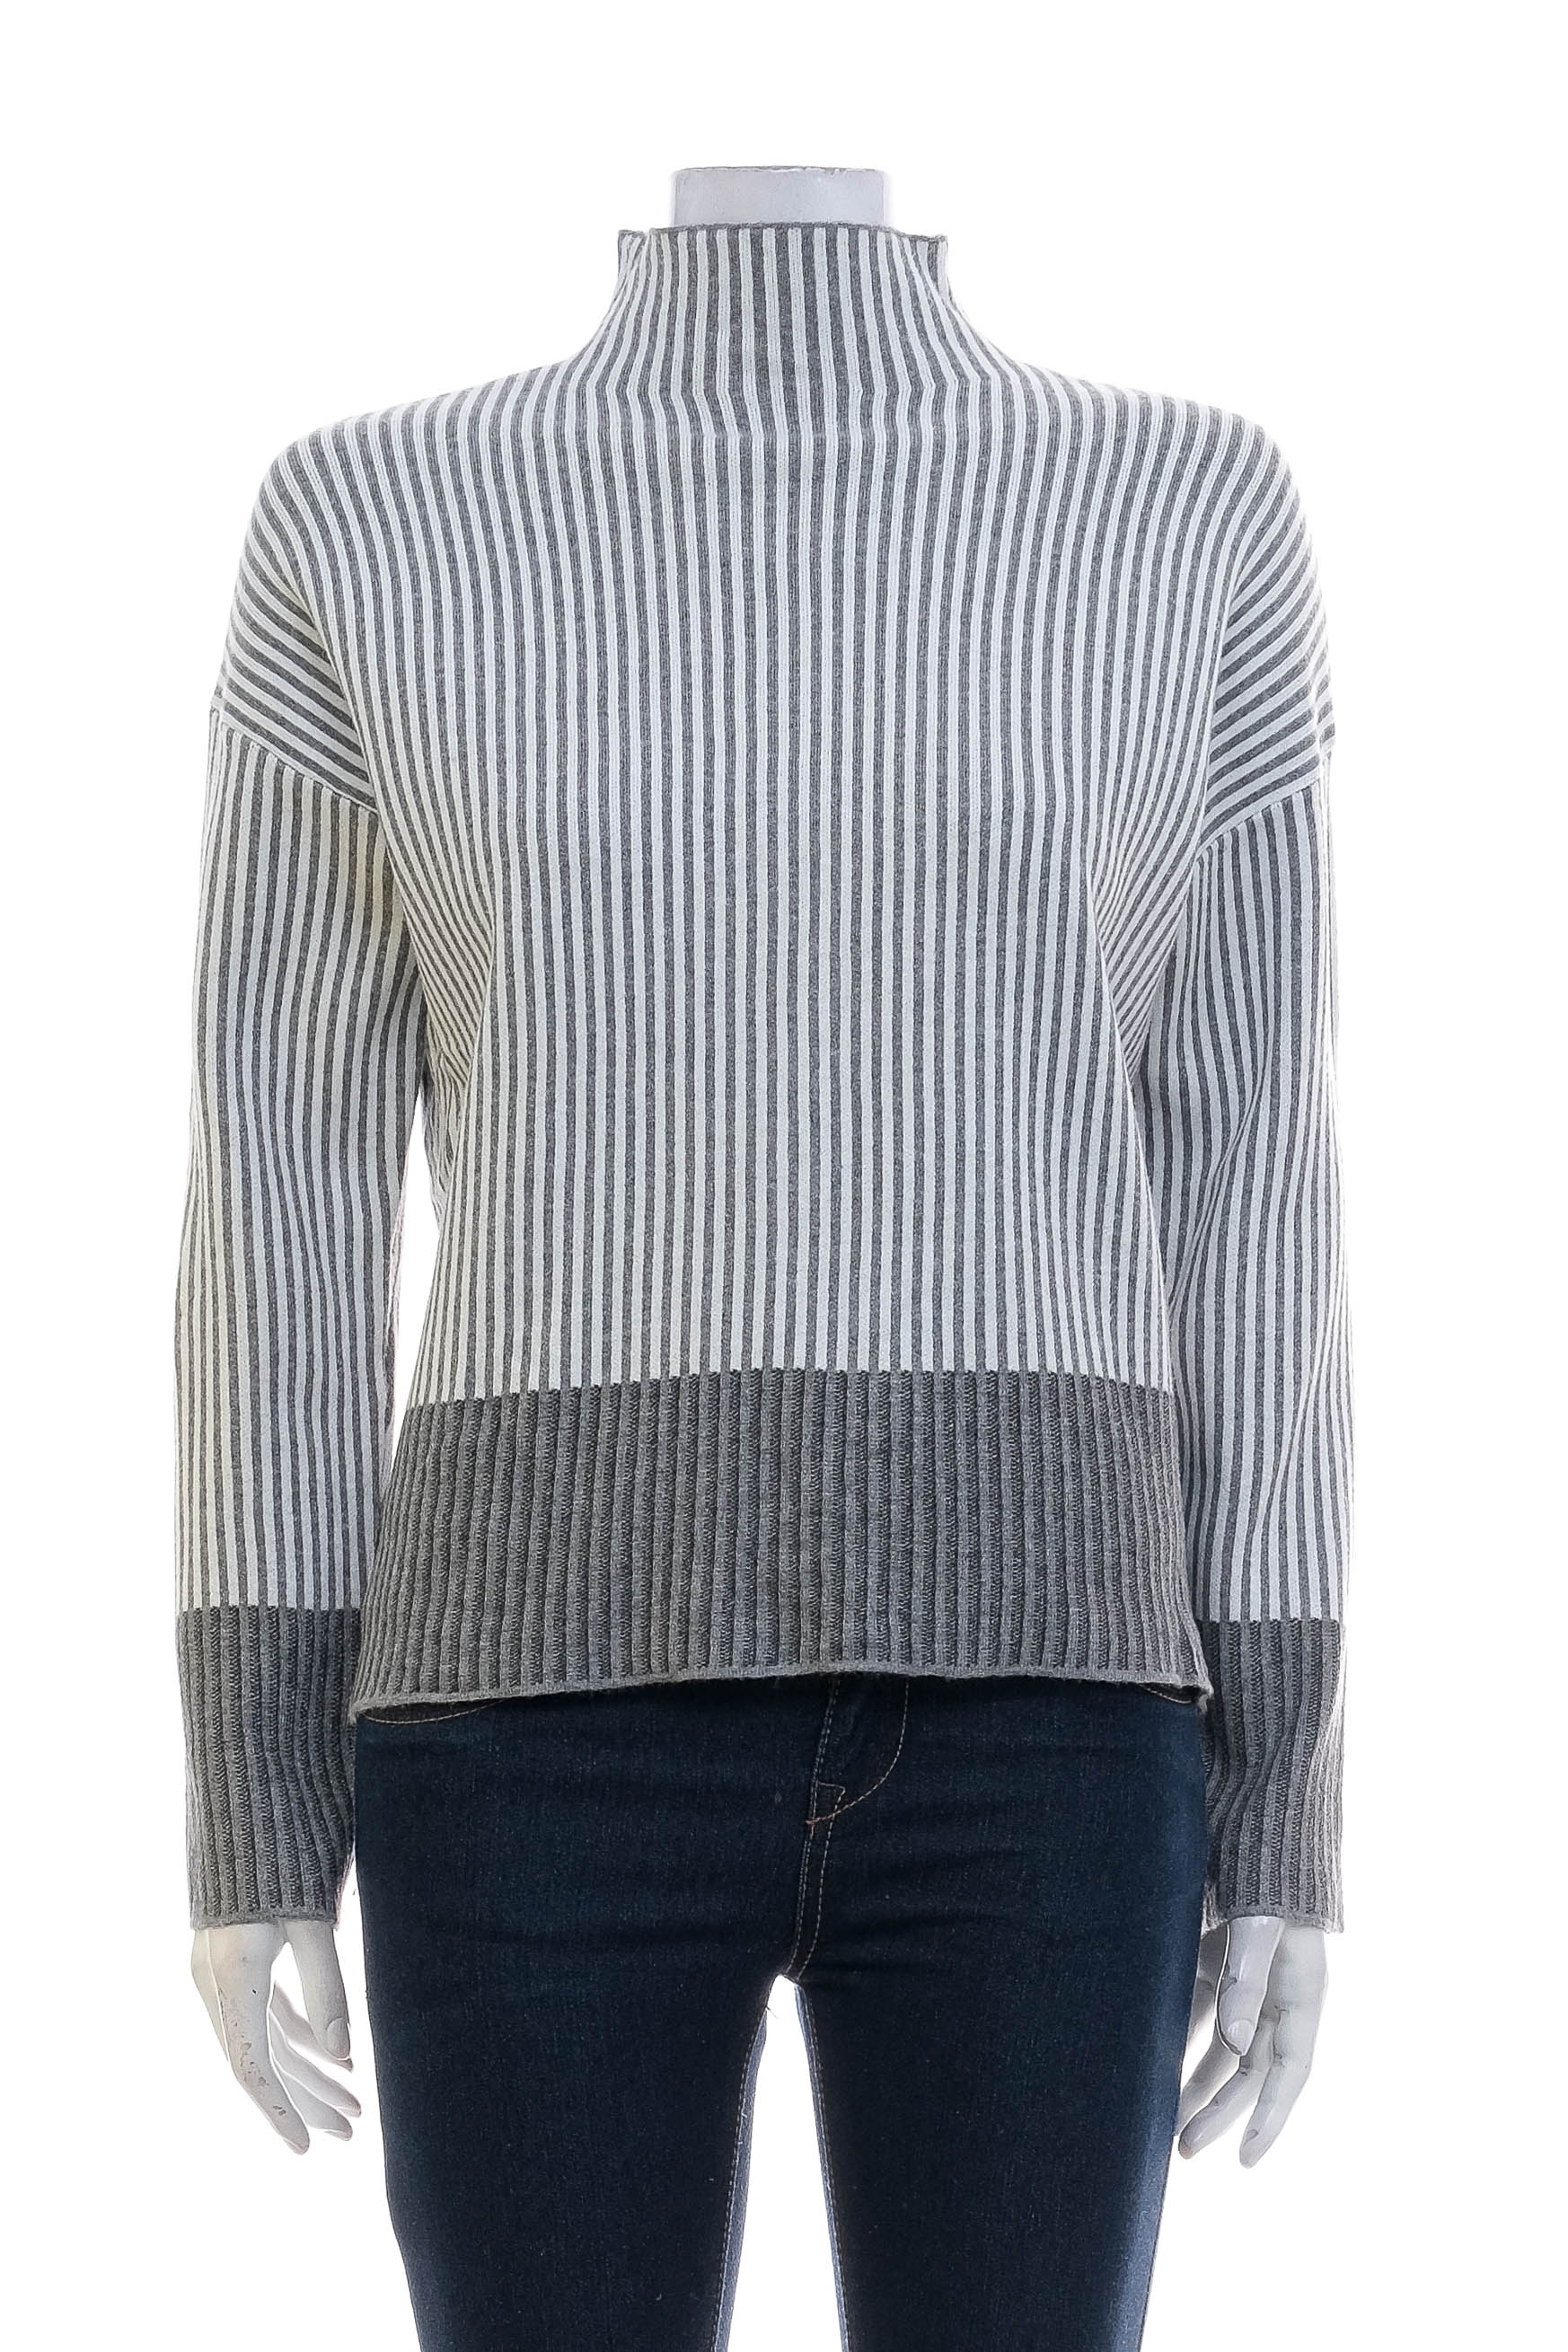 Women's sweater - RACHEL ZOE - 0